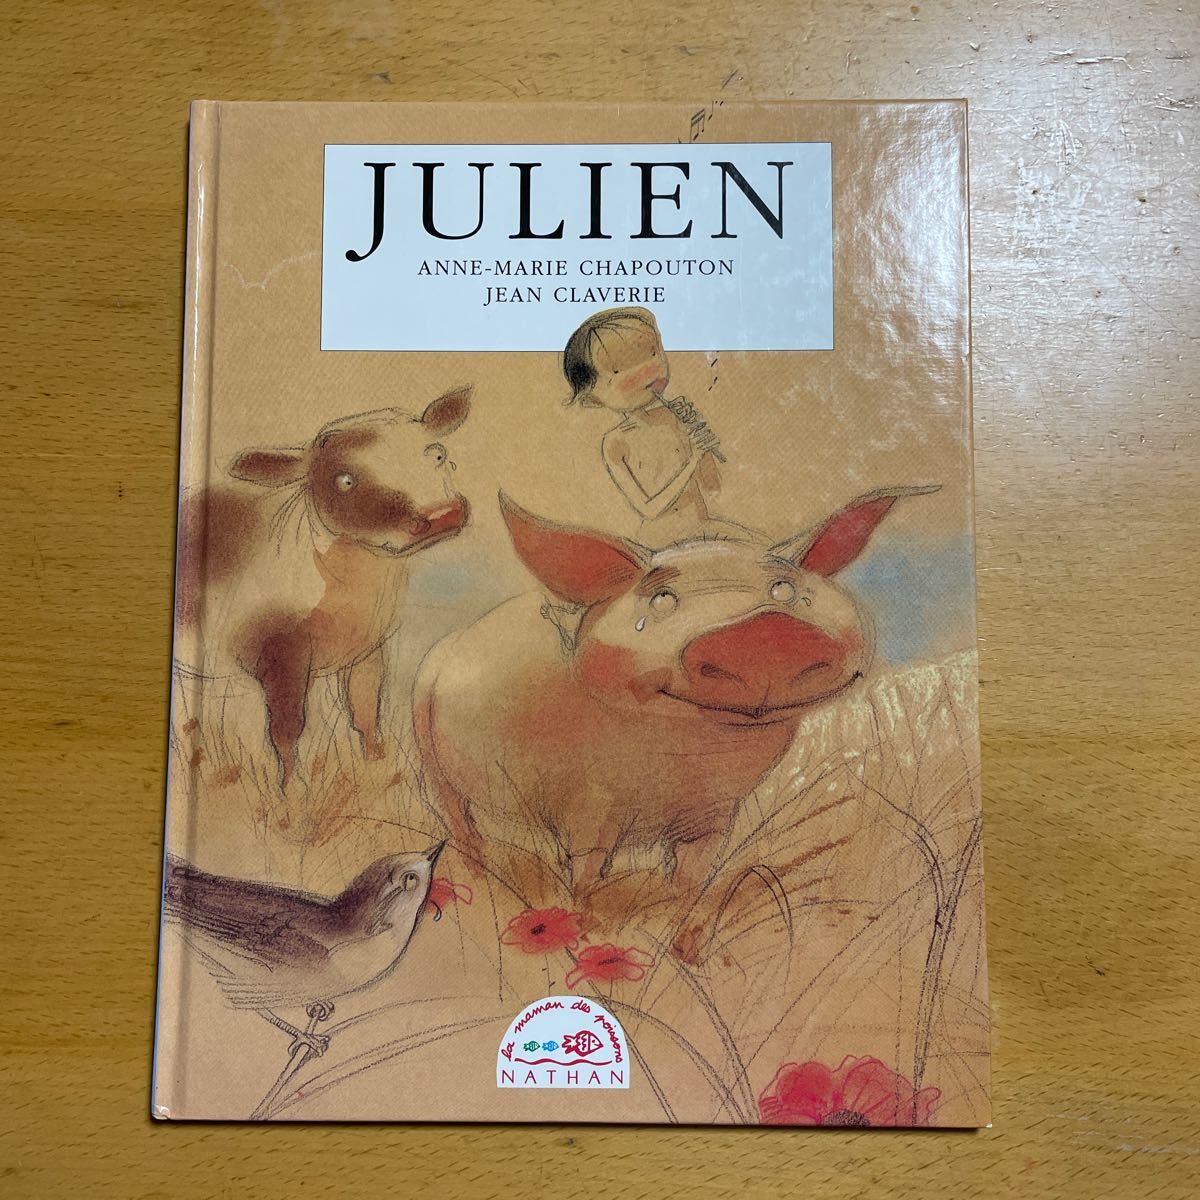  Julien Julien Anne-Marie Chapouton Jean Claverie французский язык книга с картинками ребенок . язык б/у 